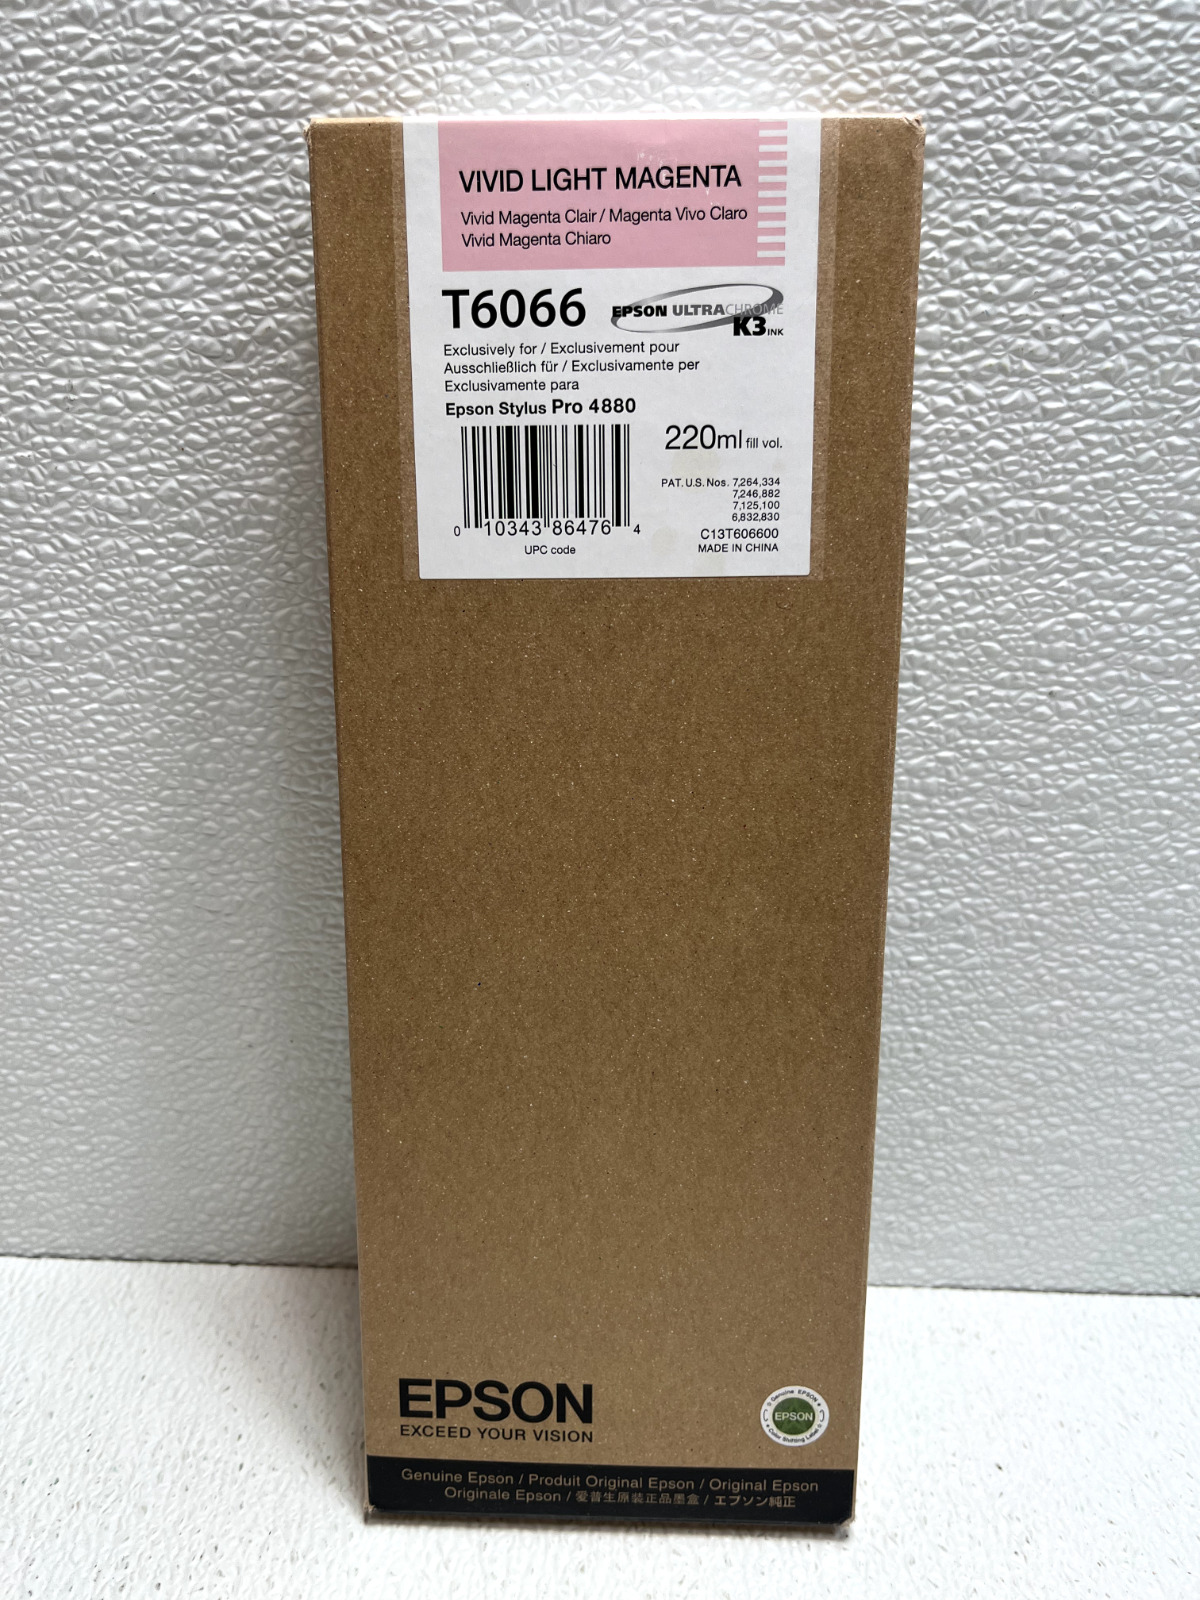 Genuine Epson Vivid Light Magenta Ink Cartridge T6066 Date: 2013